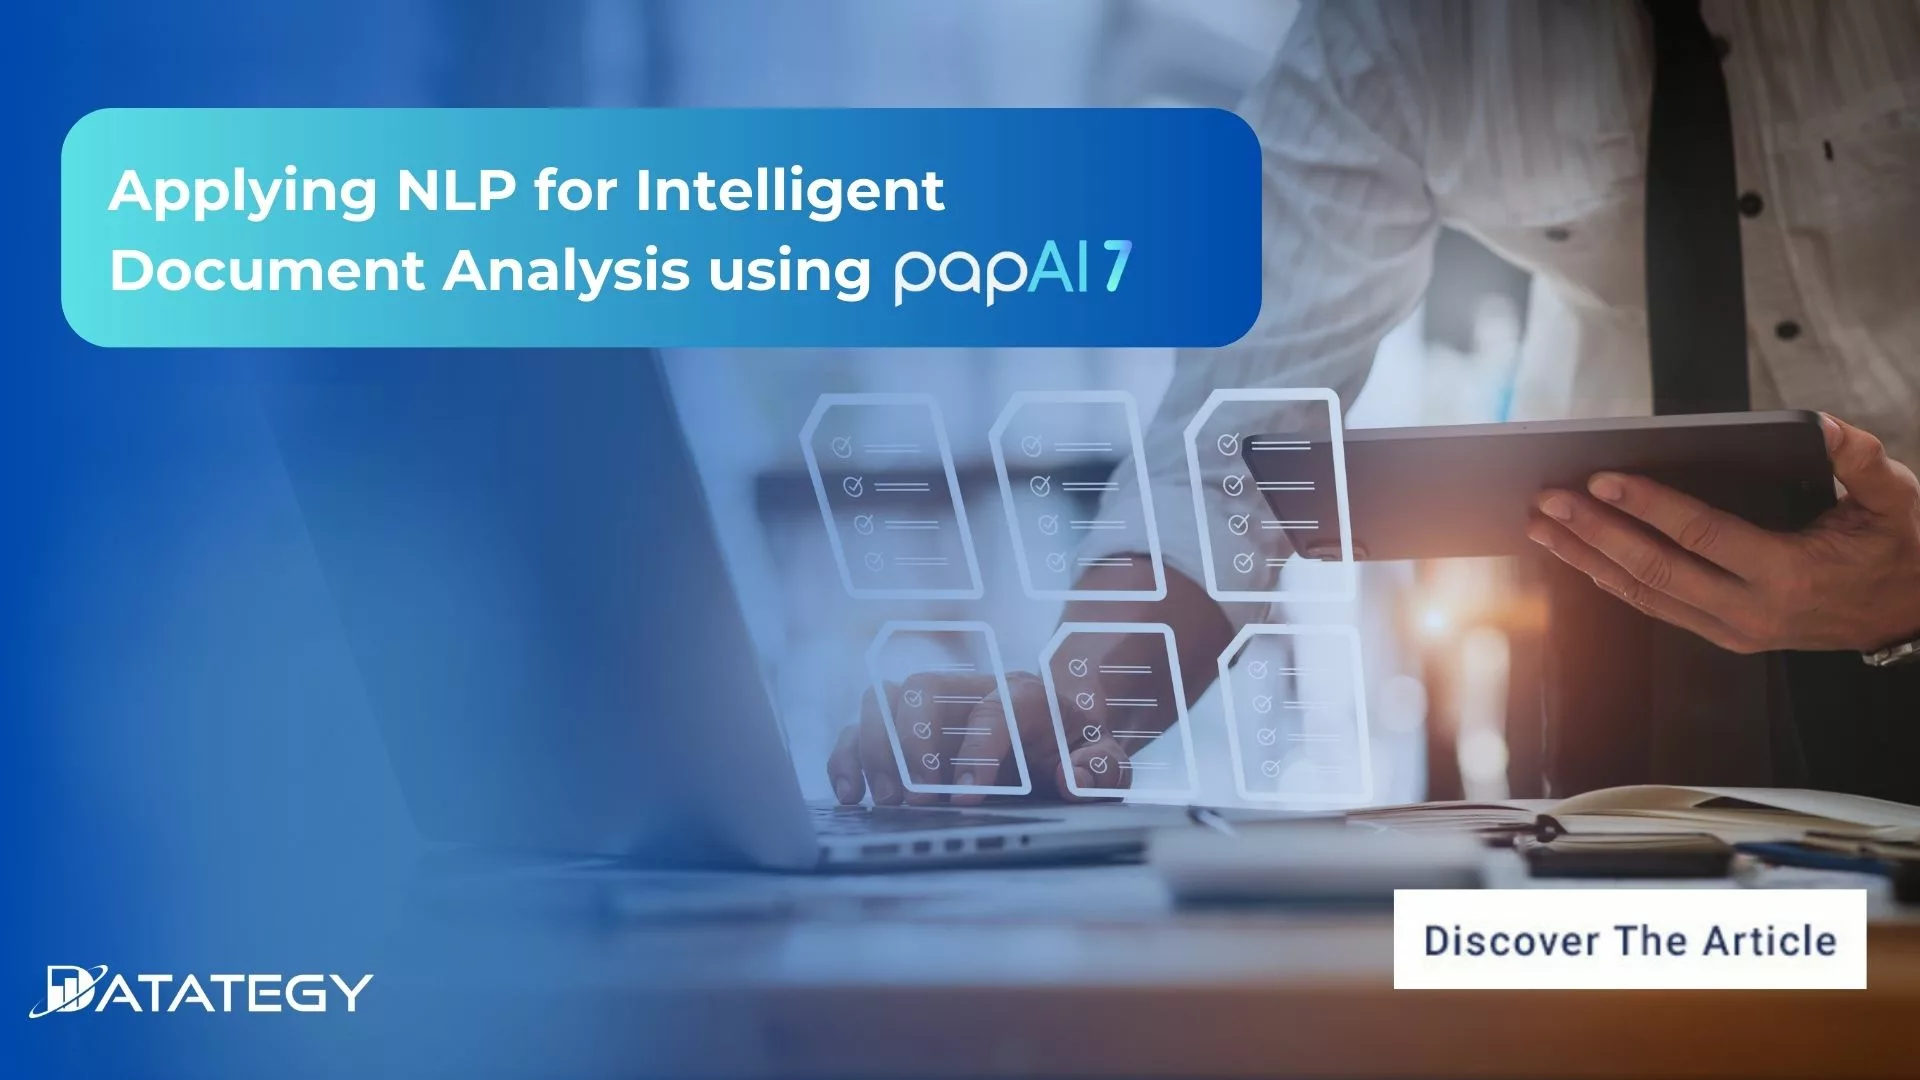 Applying NLP for Intelligent Document Analysis using papAI 7